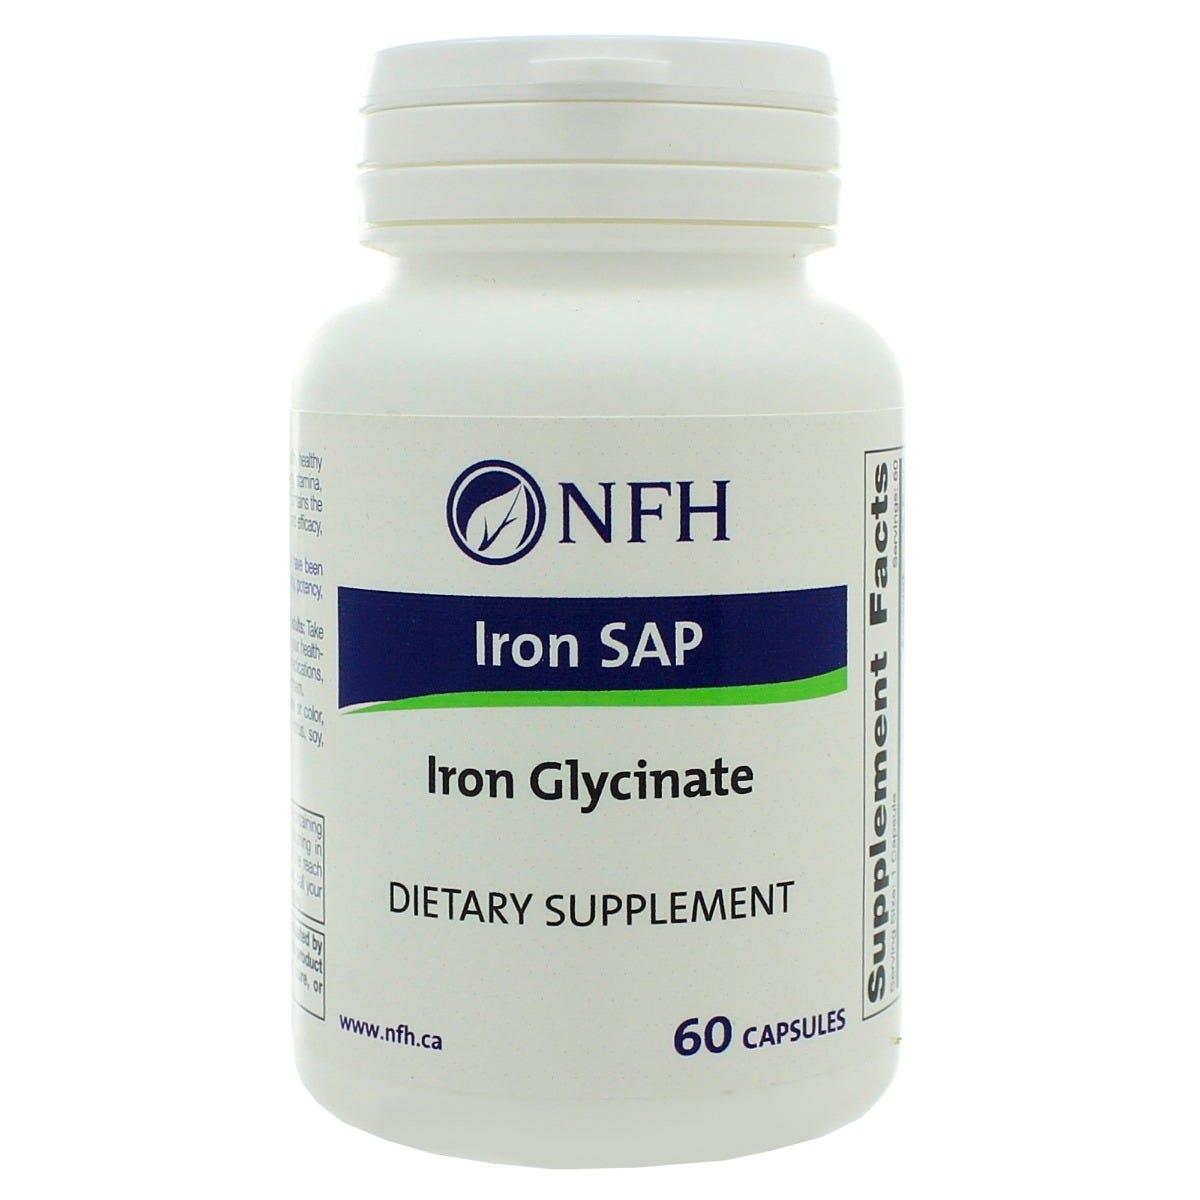 NFH Iron SAP, 6 Capsules Online